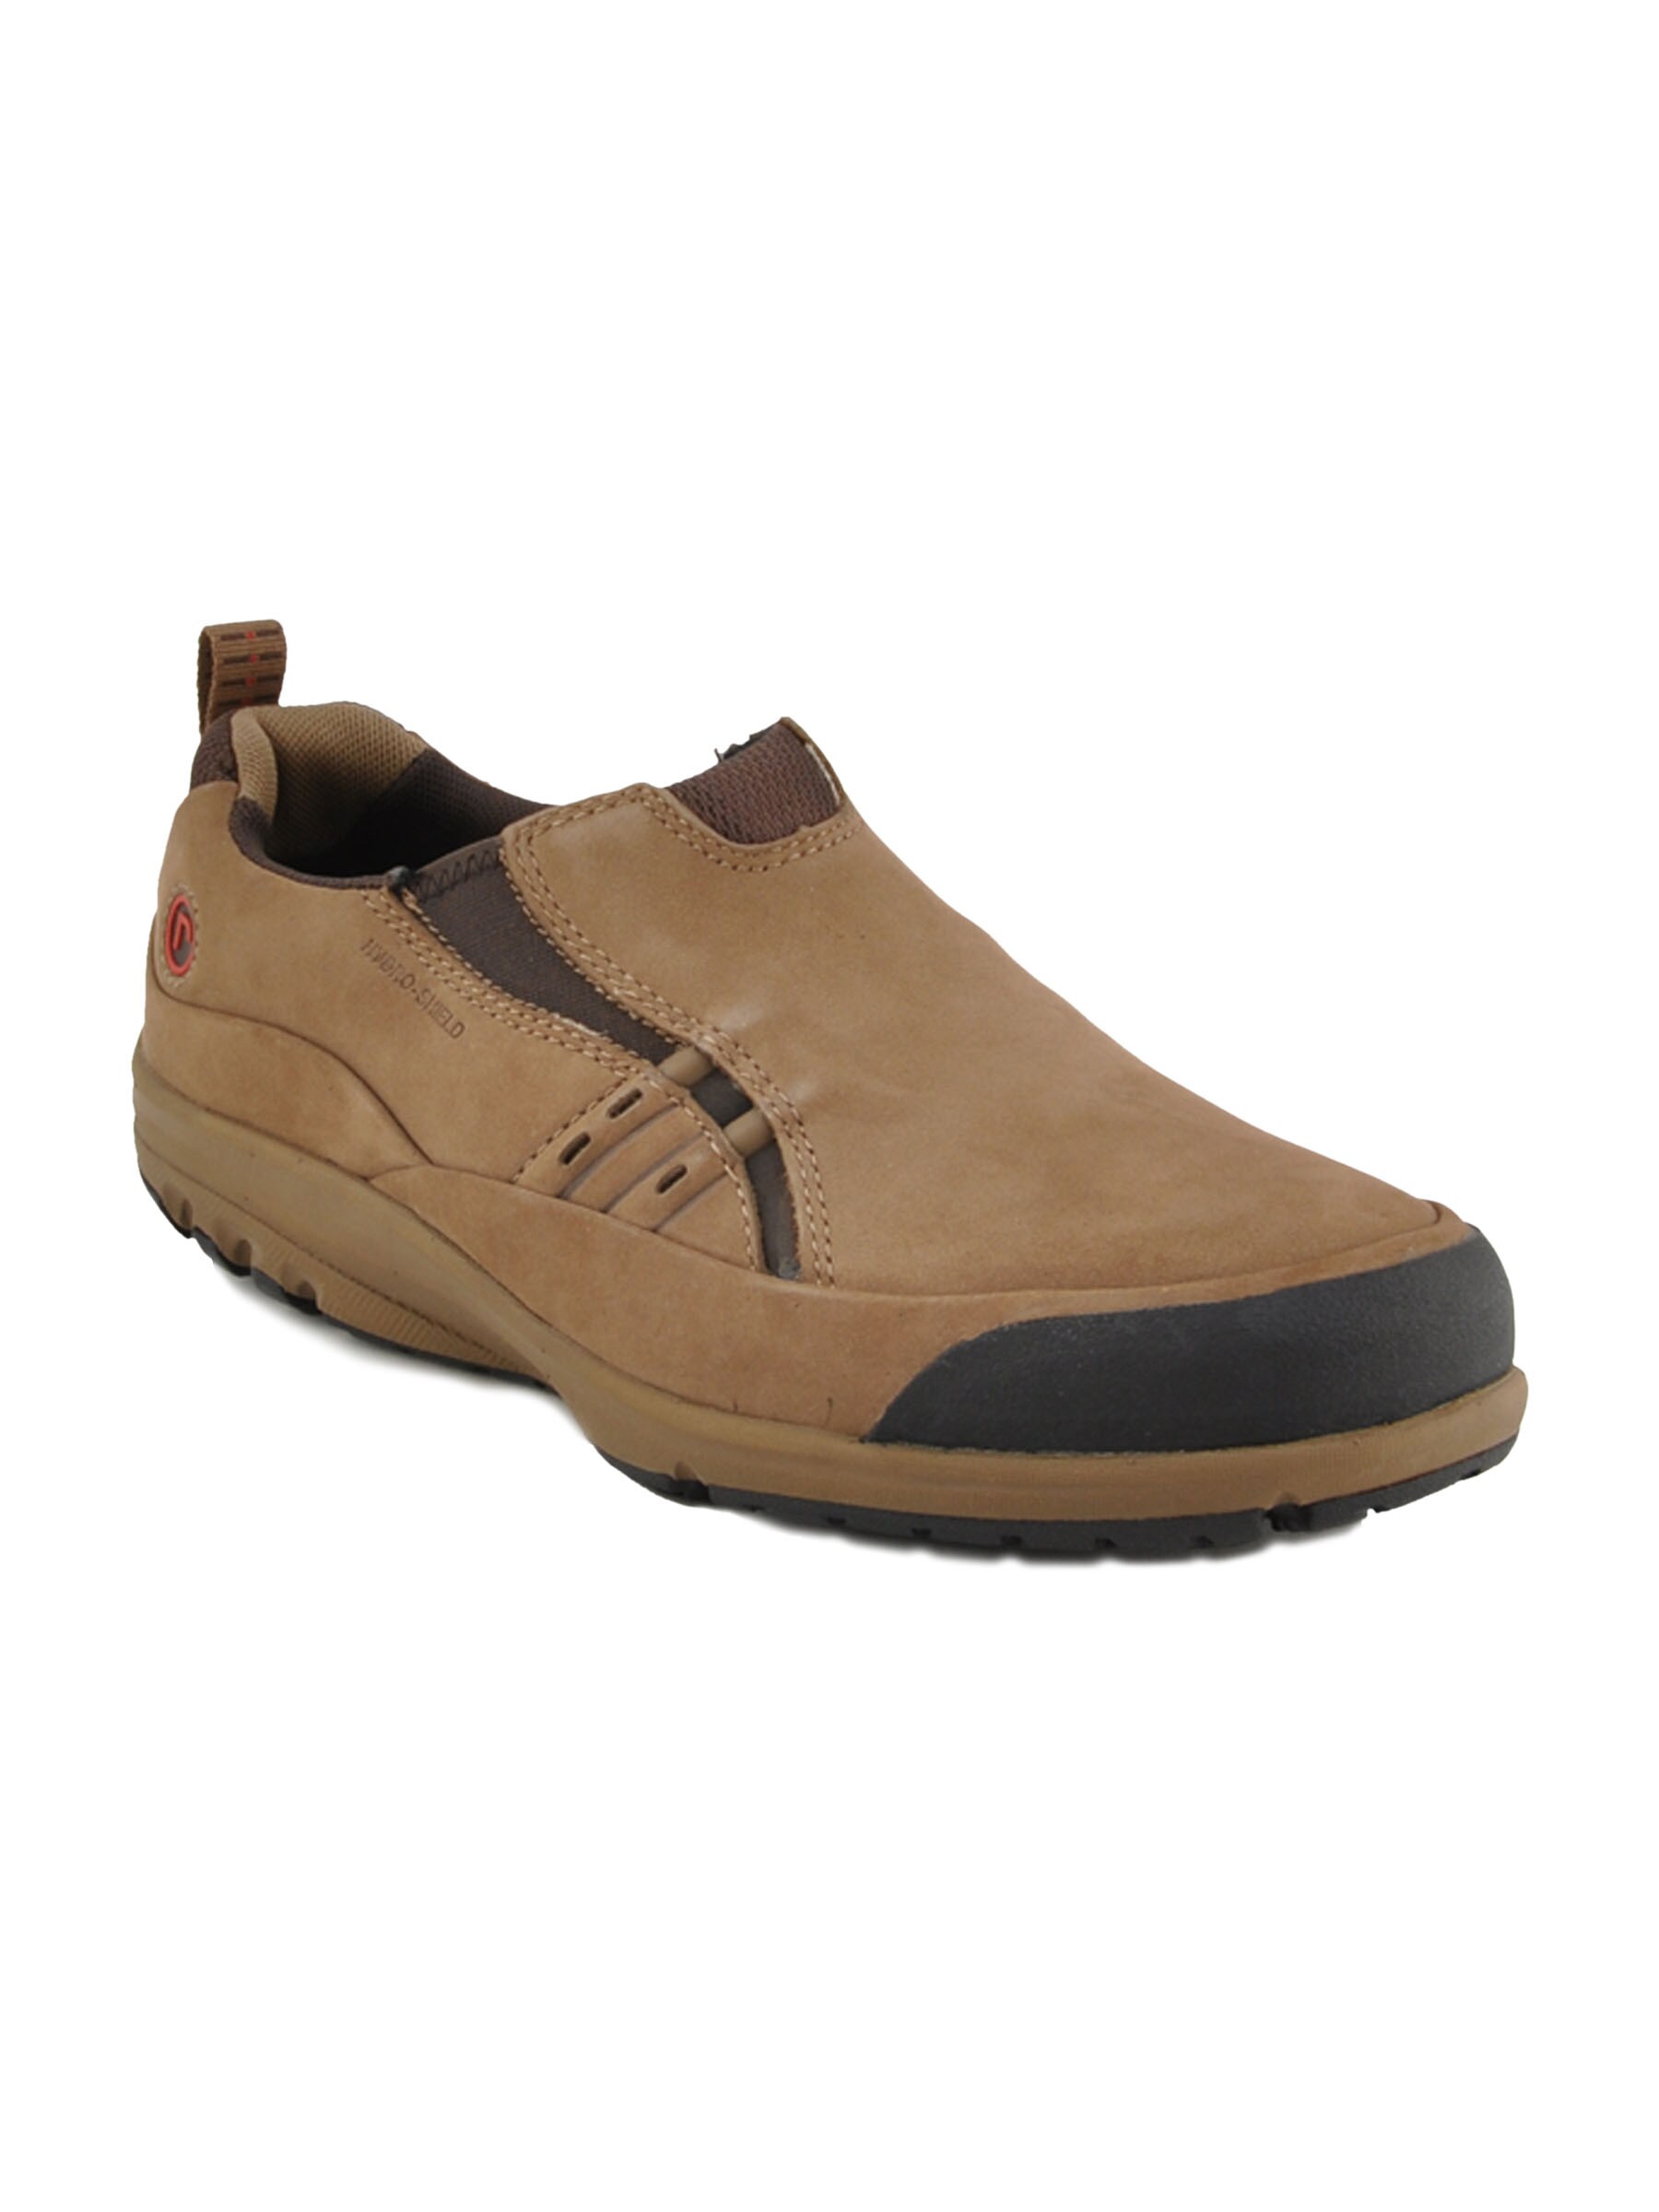 Rockport Men Sc Slip On Brown Casual Shoes